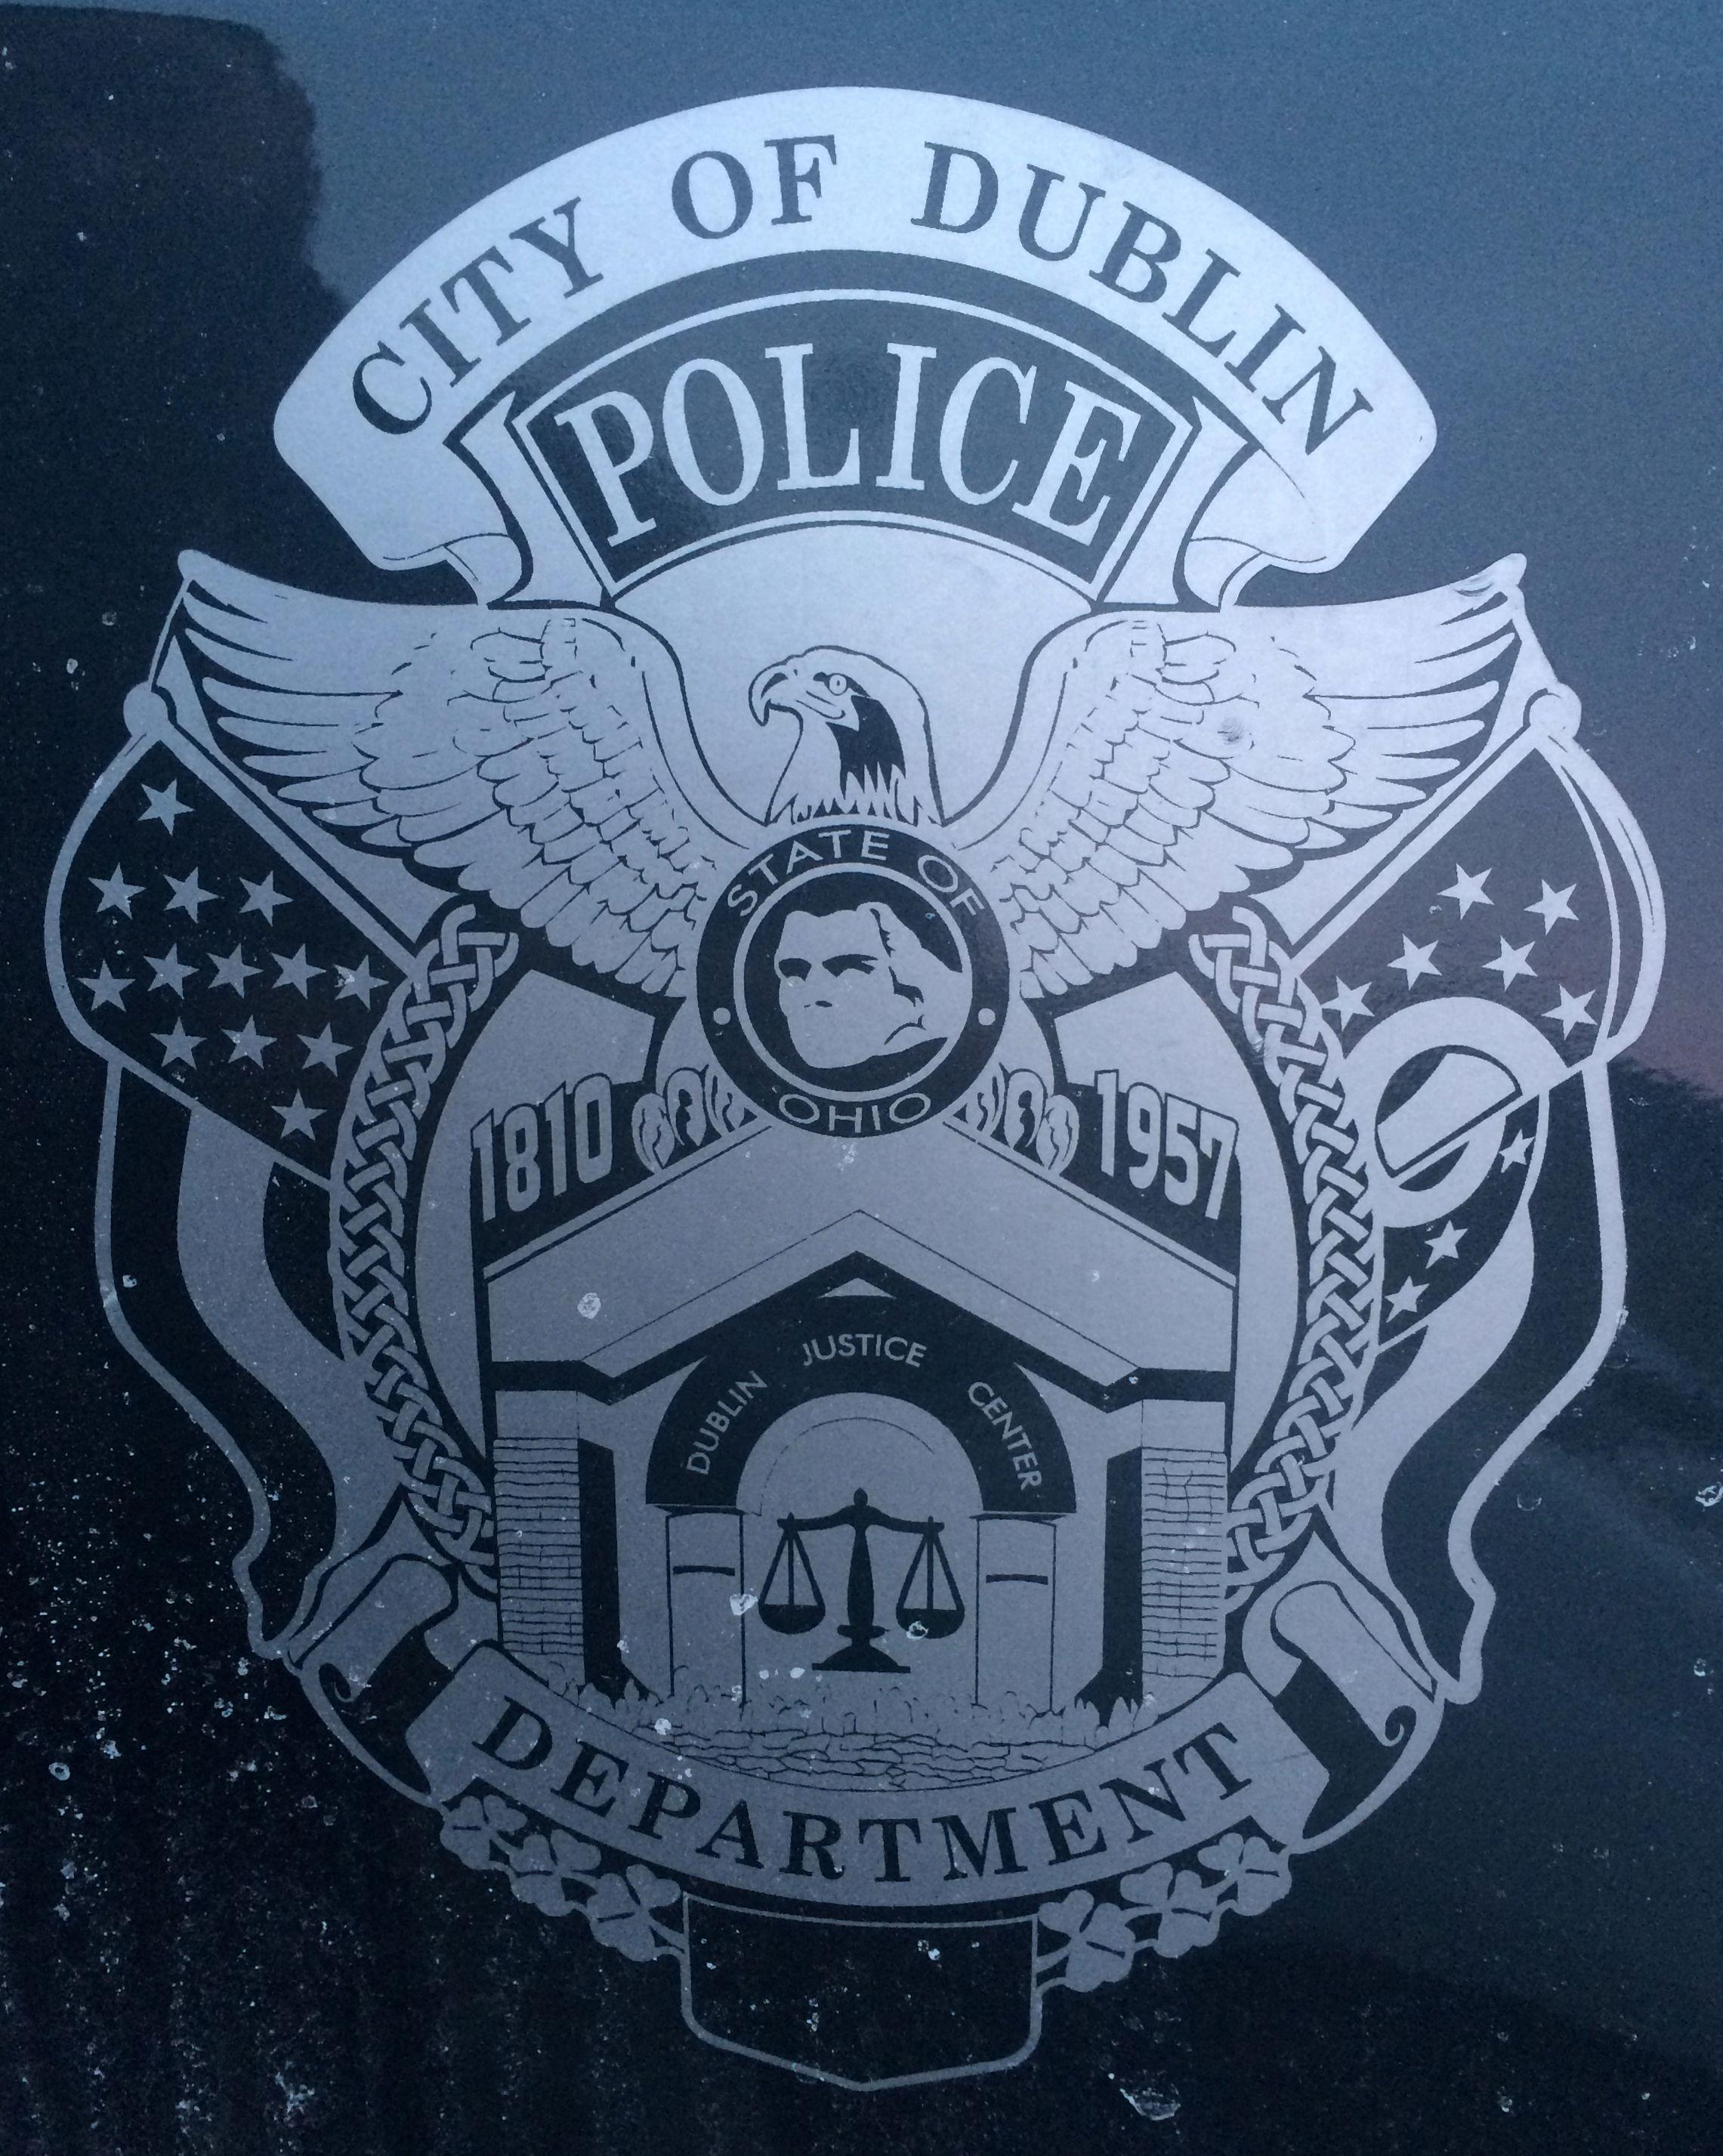 City of Dublin Ohio Logo - City of Dublin Police emblem (Dublin, Ohio)